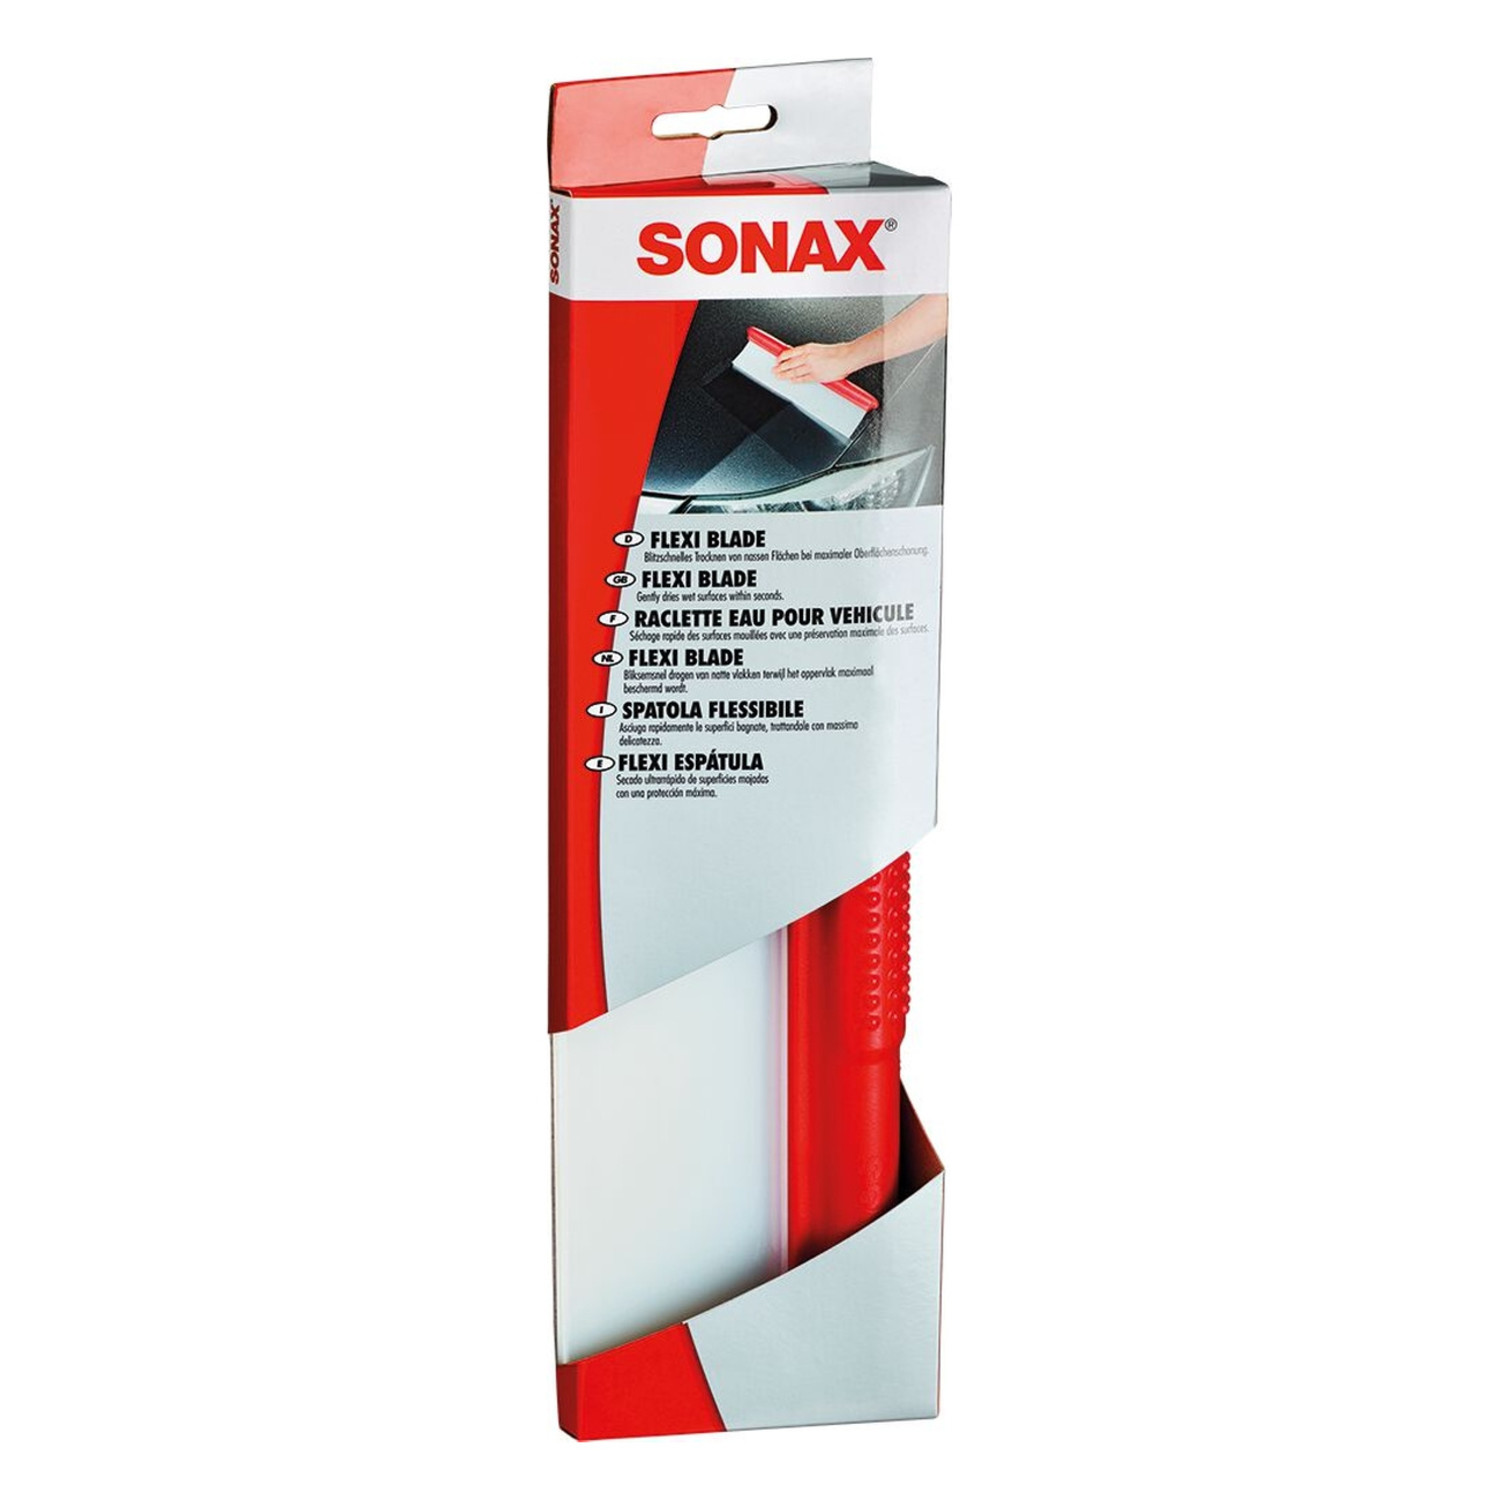 Sonax FlexiBlade Wasserabzieher - Car Care King